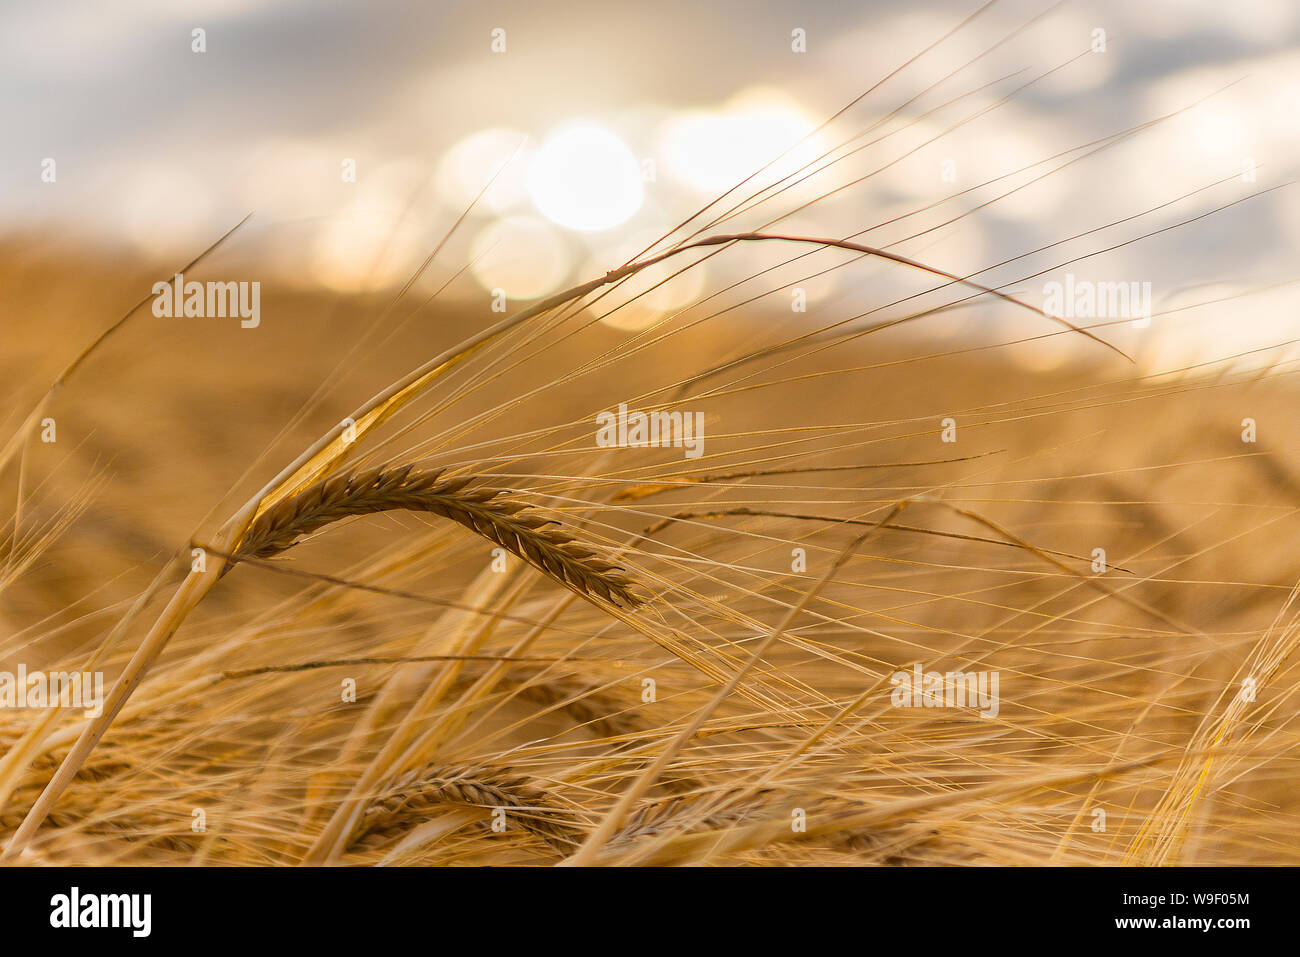 Ripe barley in the golden light of sunset, soft bokeh background Stock Photo